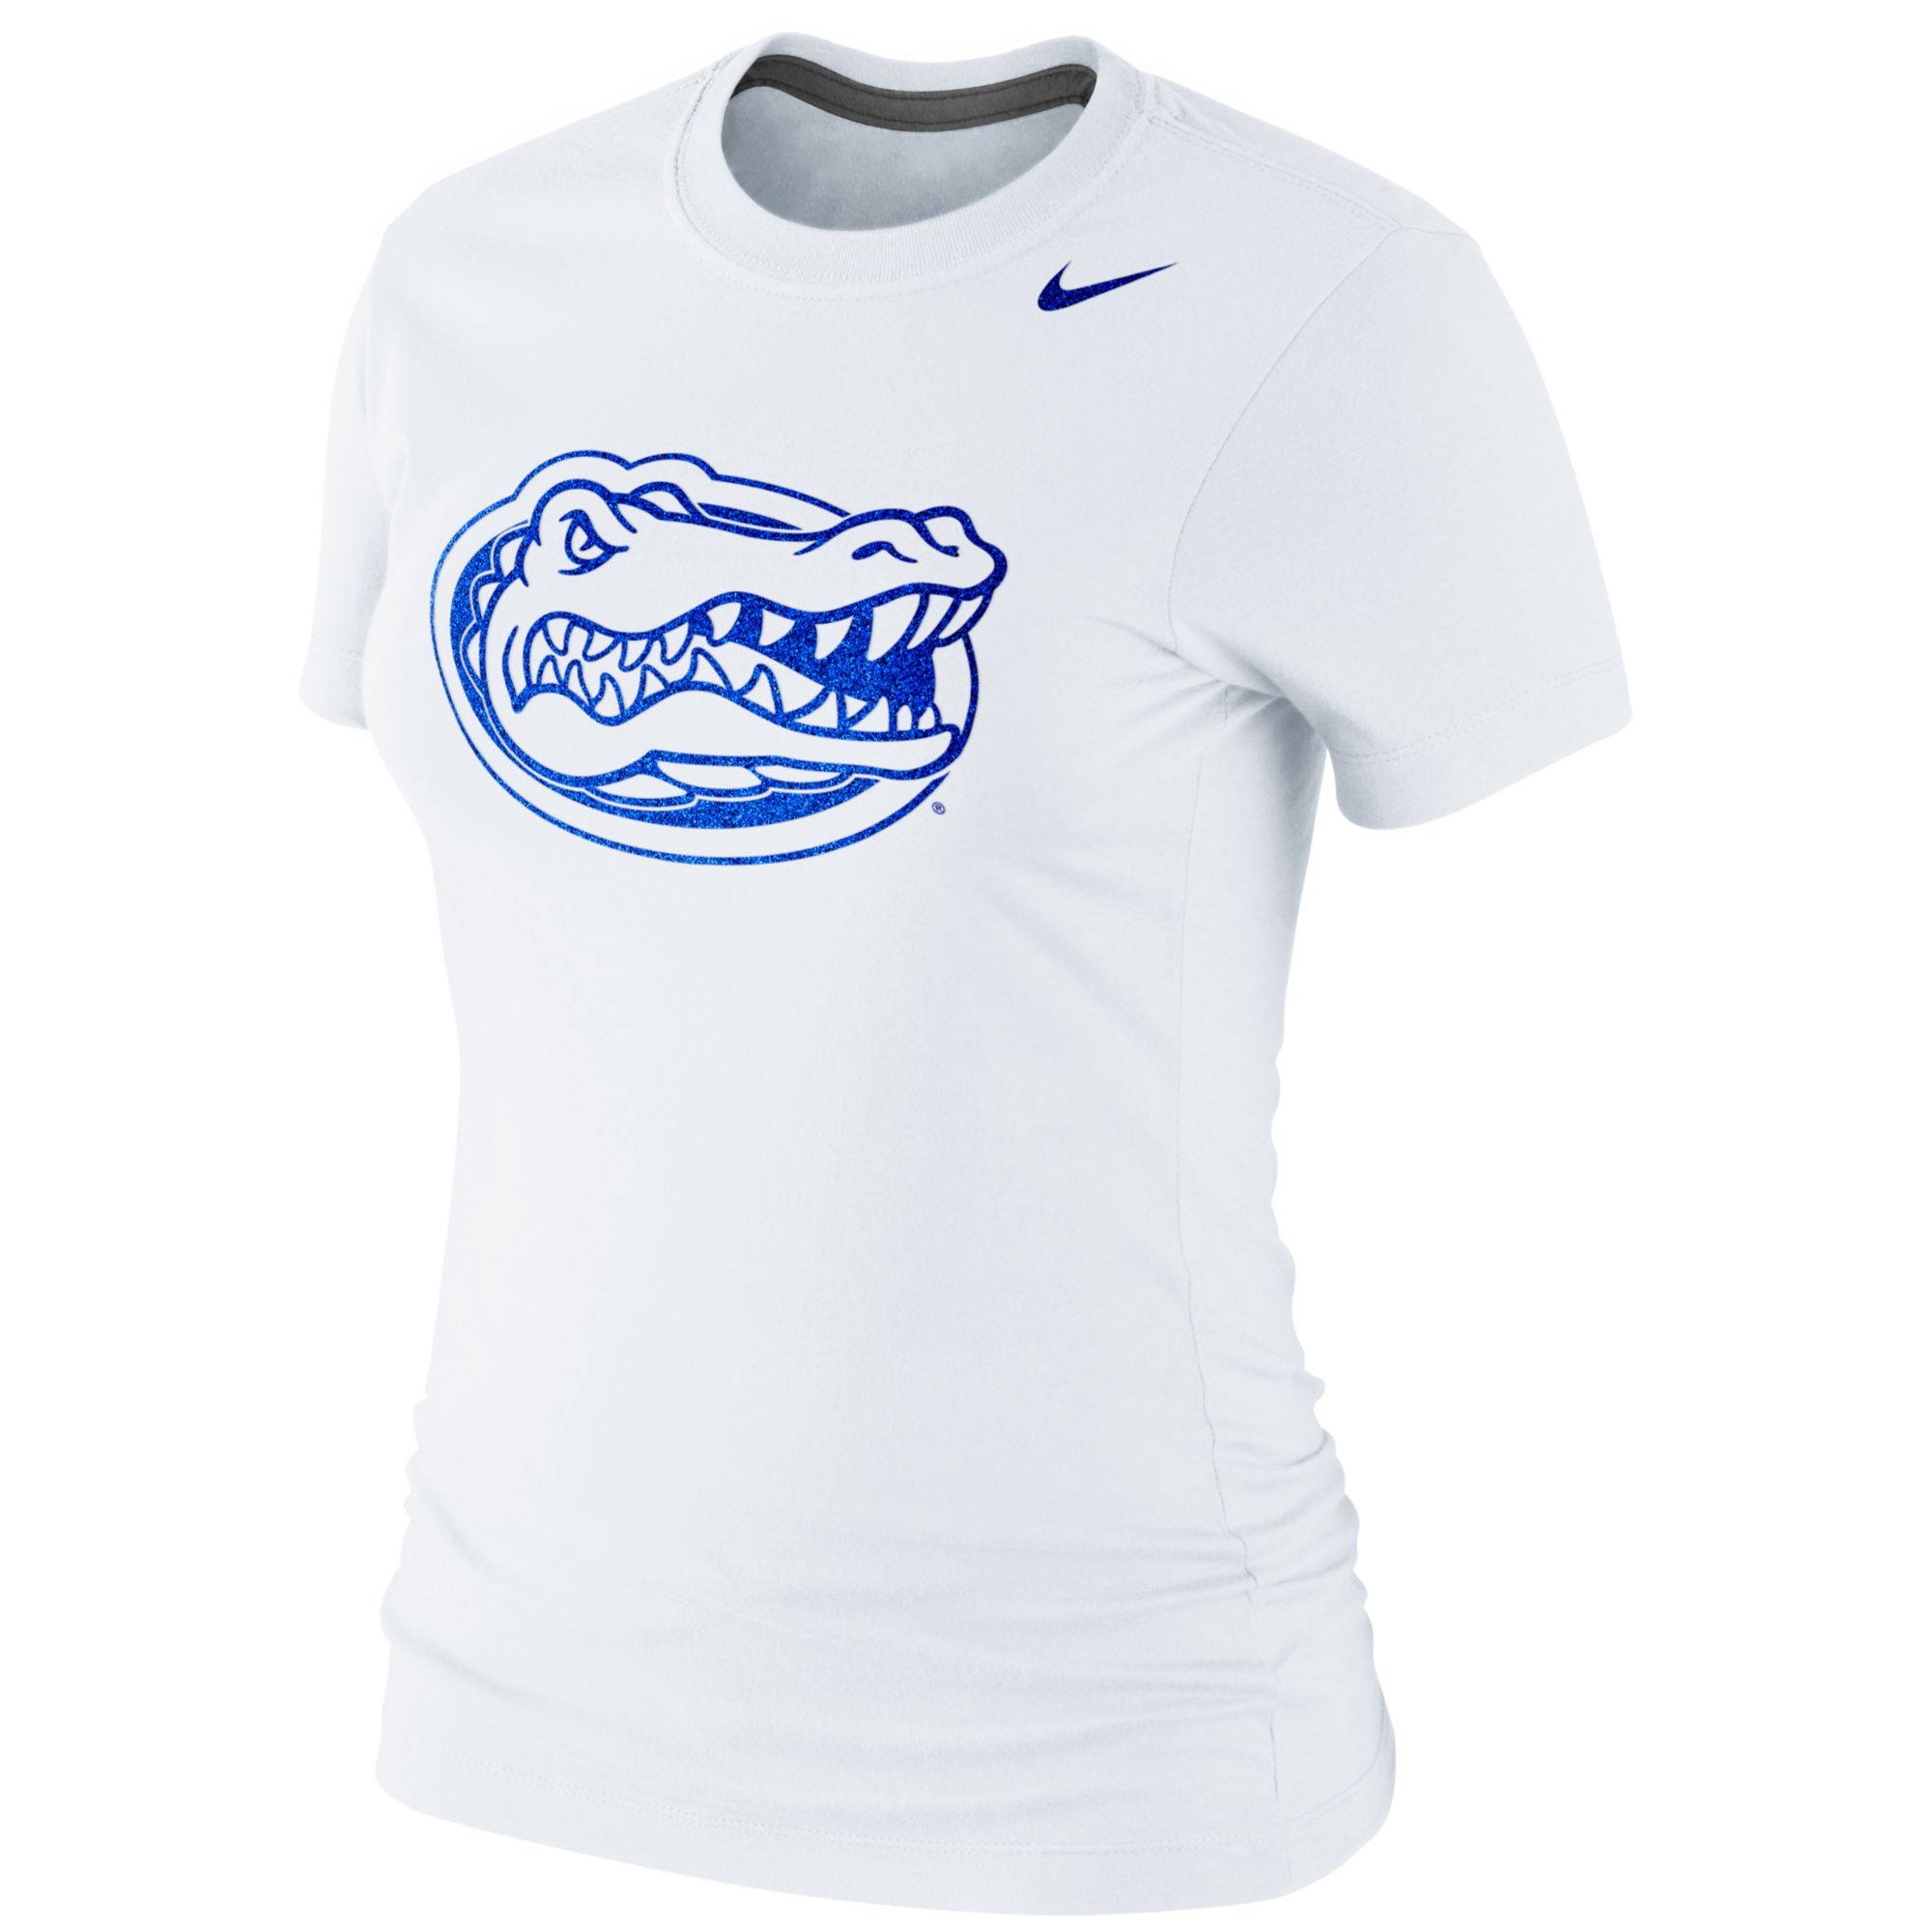 Lyst - Nike Short-Sleeve NCAA Florida Gators Women's T-Shirt in White